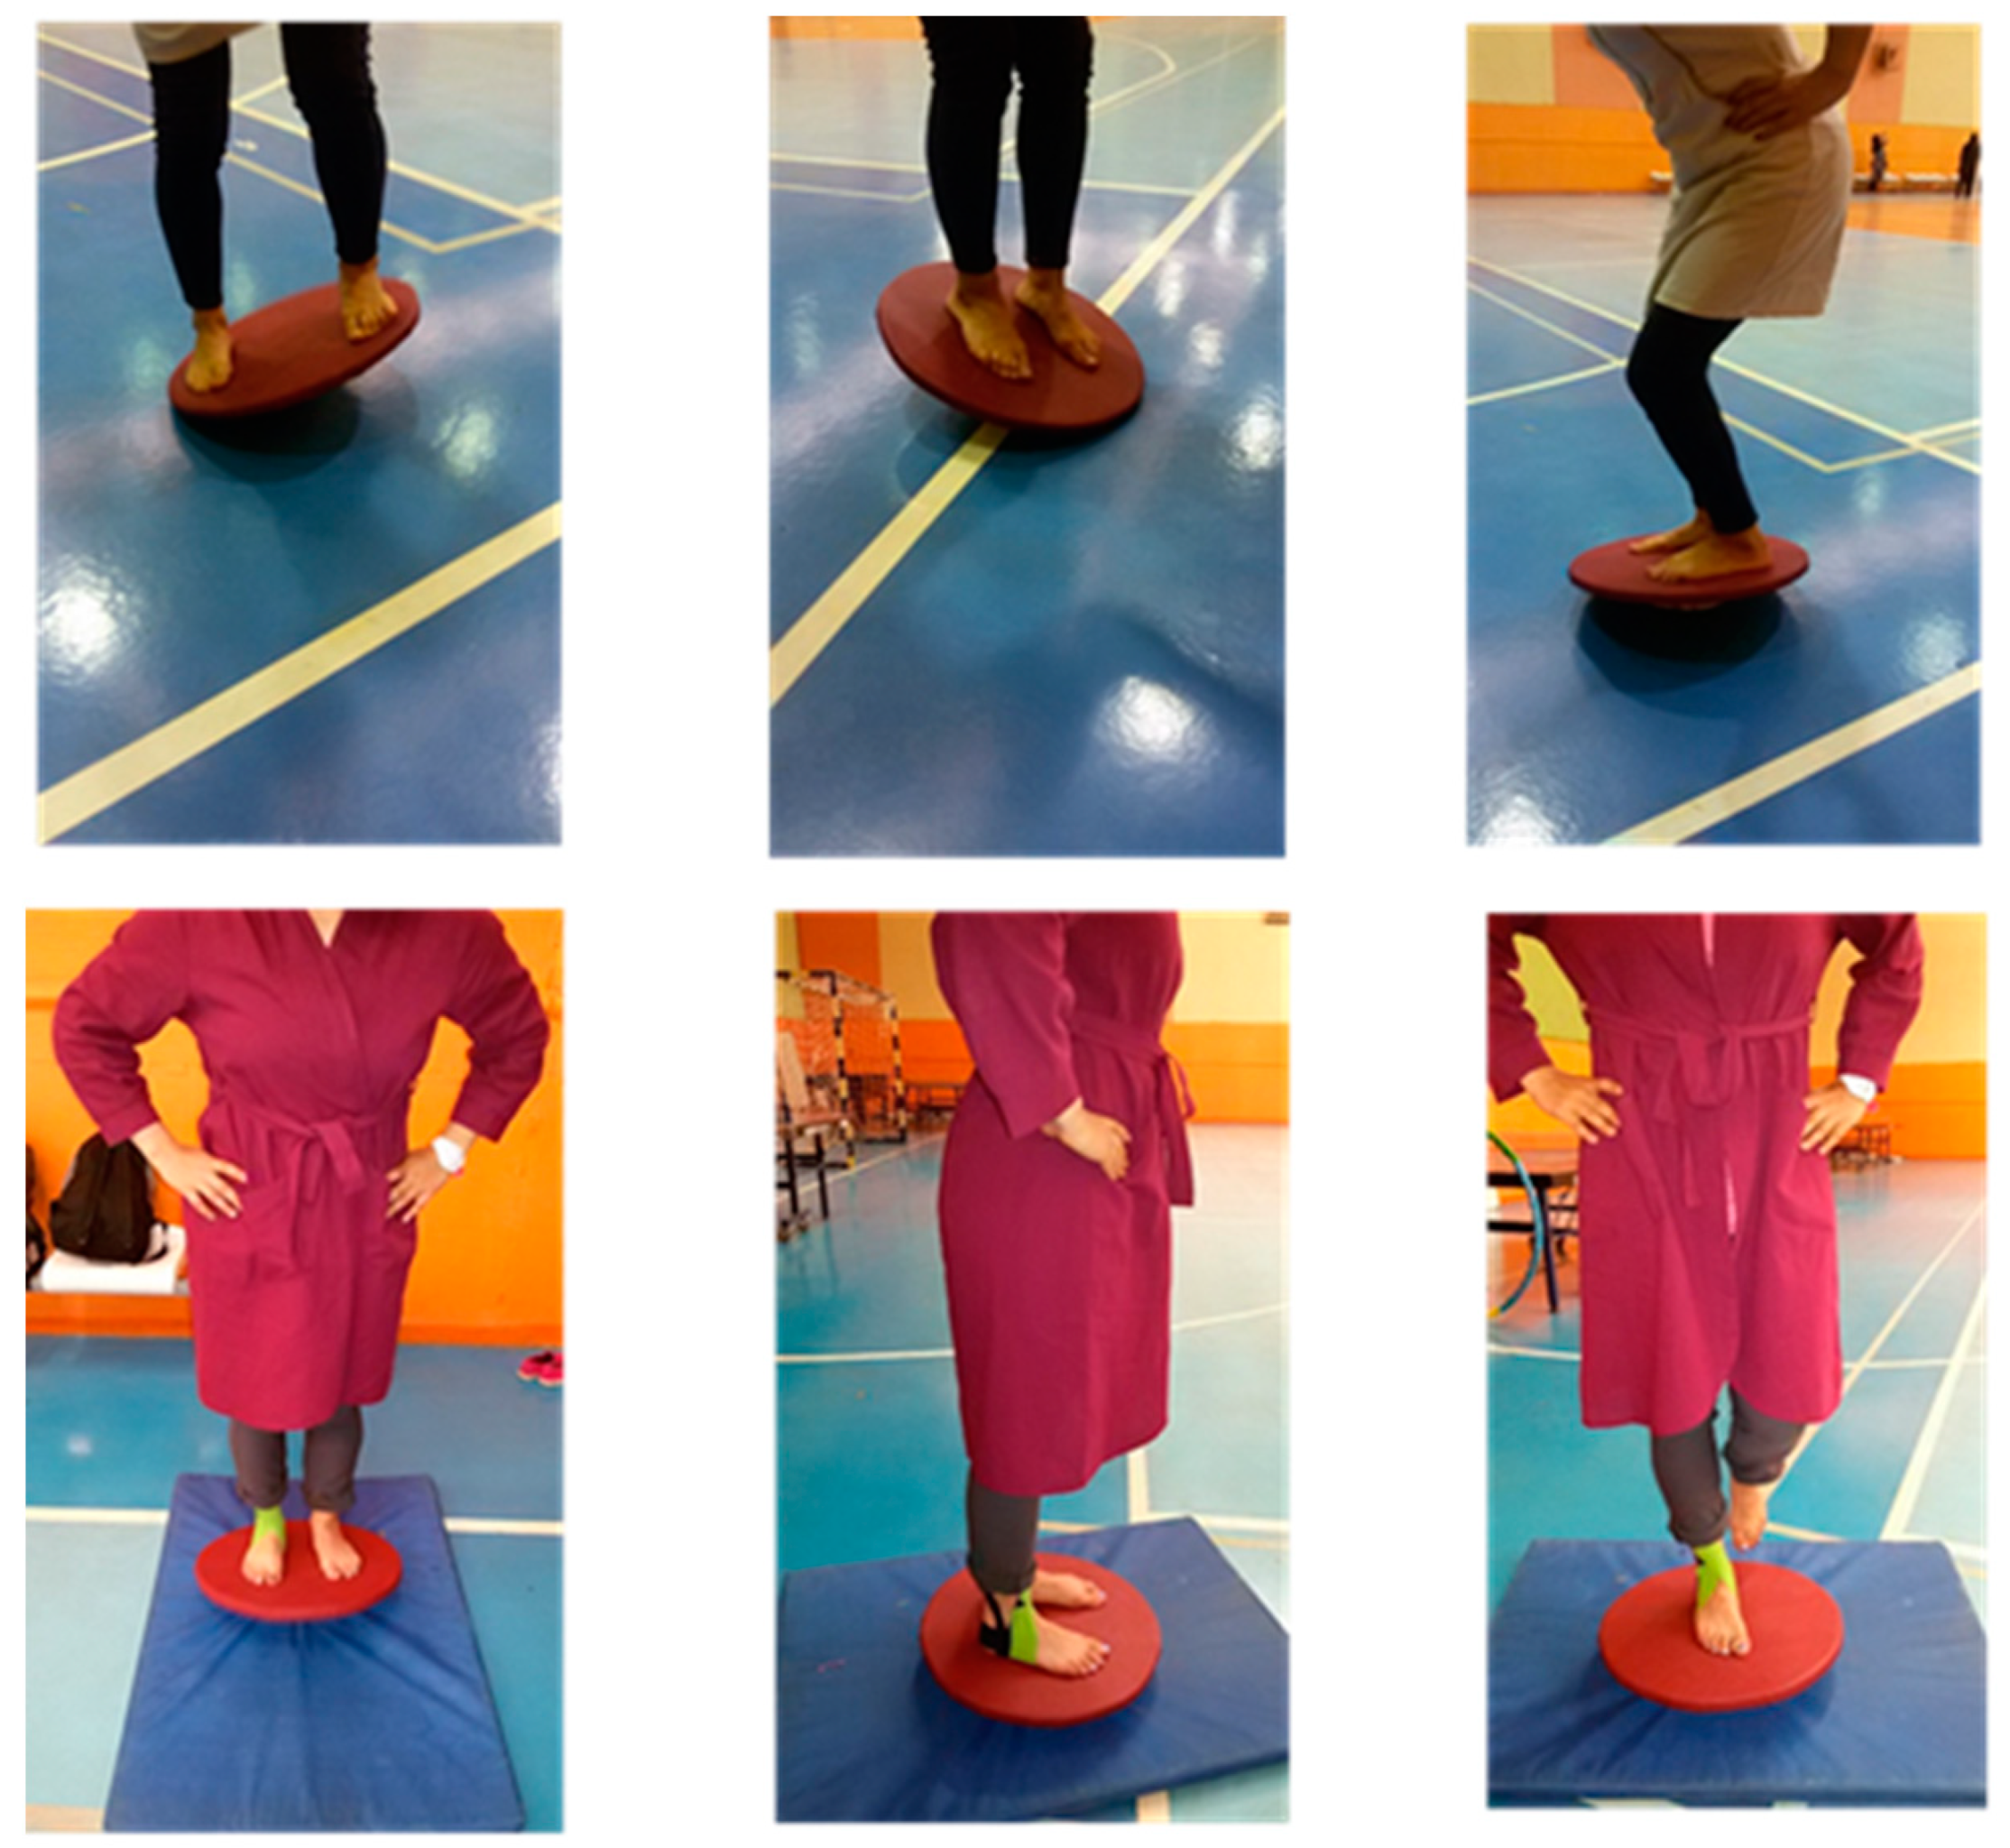 Acute ankle sprain in athletes: Clinical aspects and algorithmic